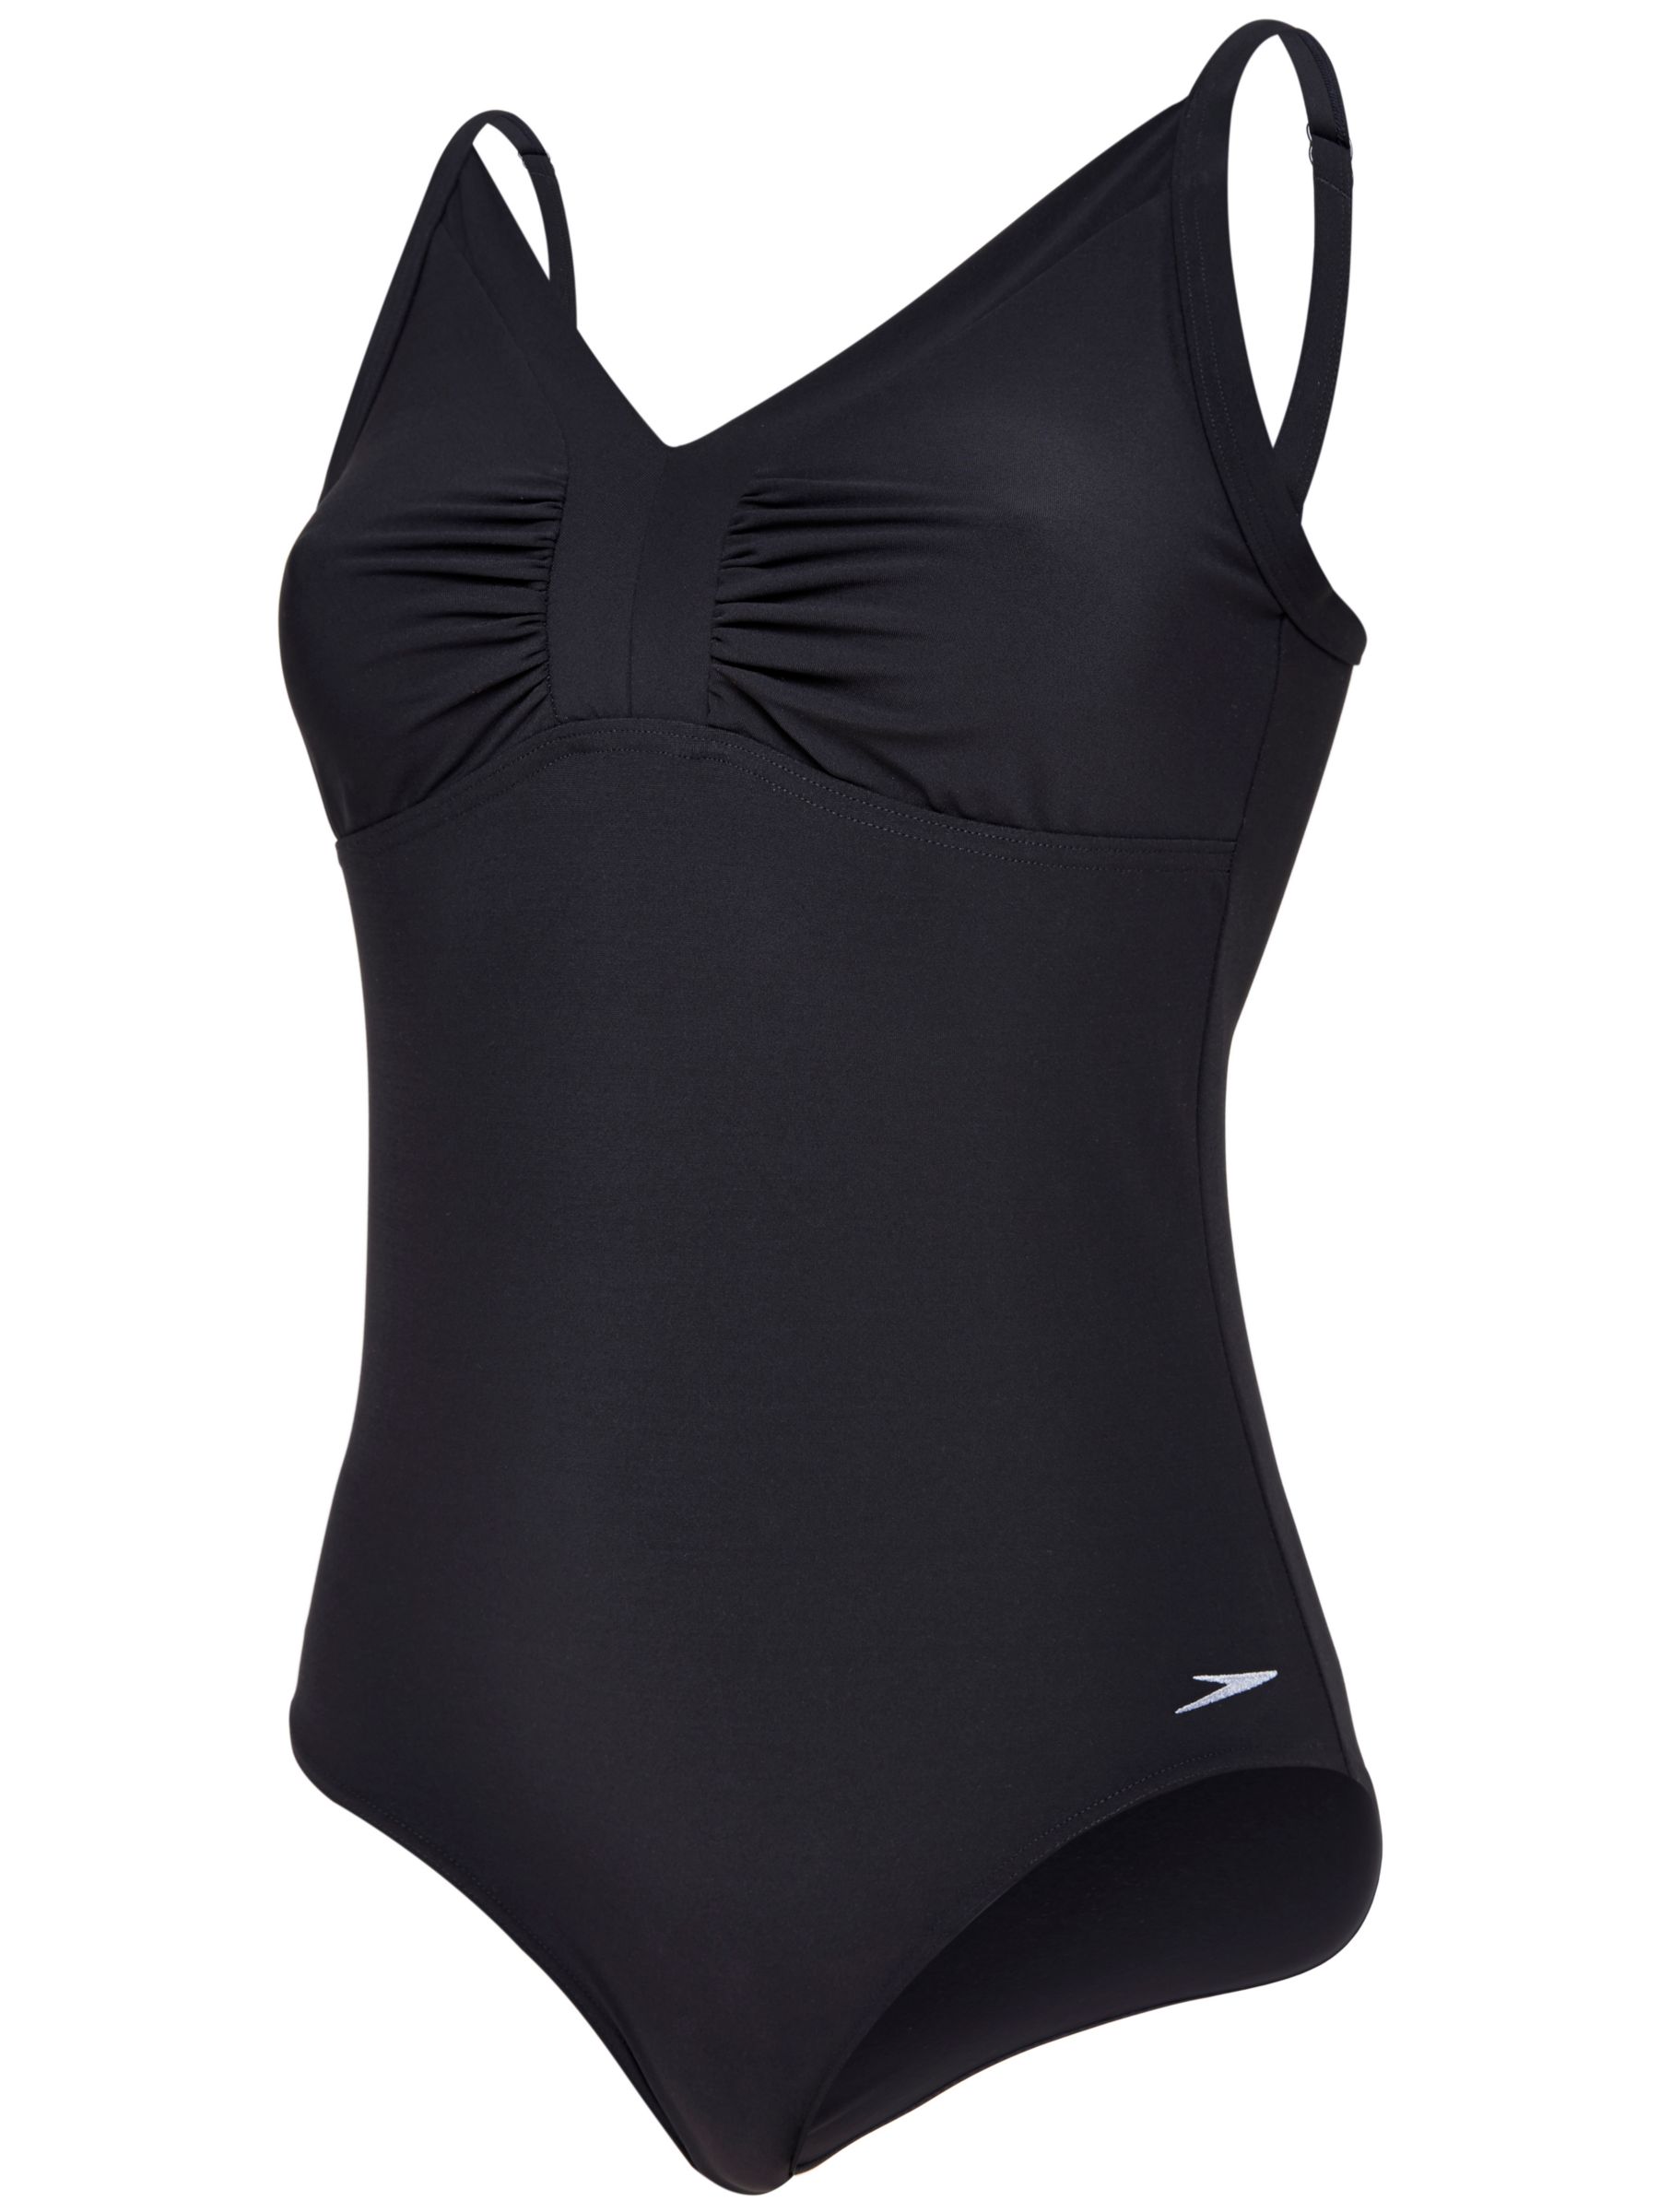 Speedo Sculpture Watergem Swimsuit, Black